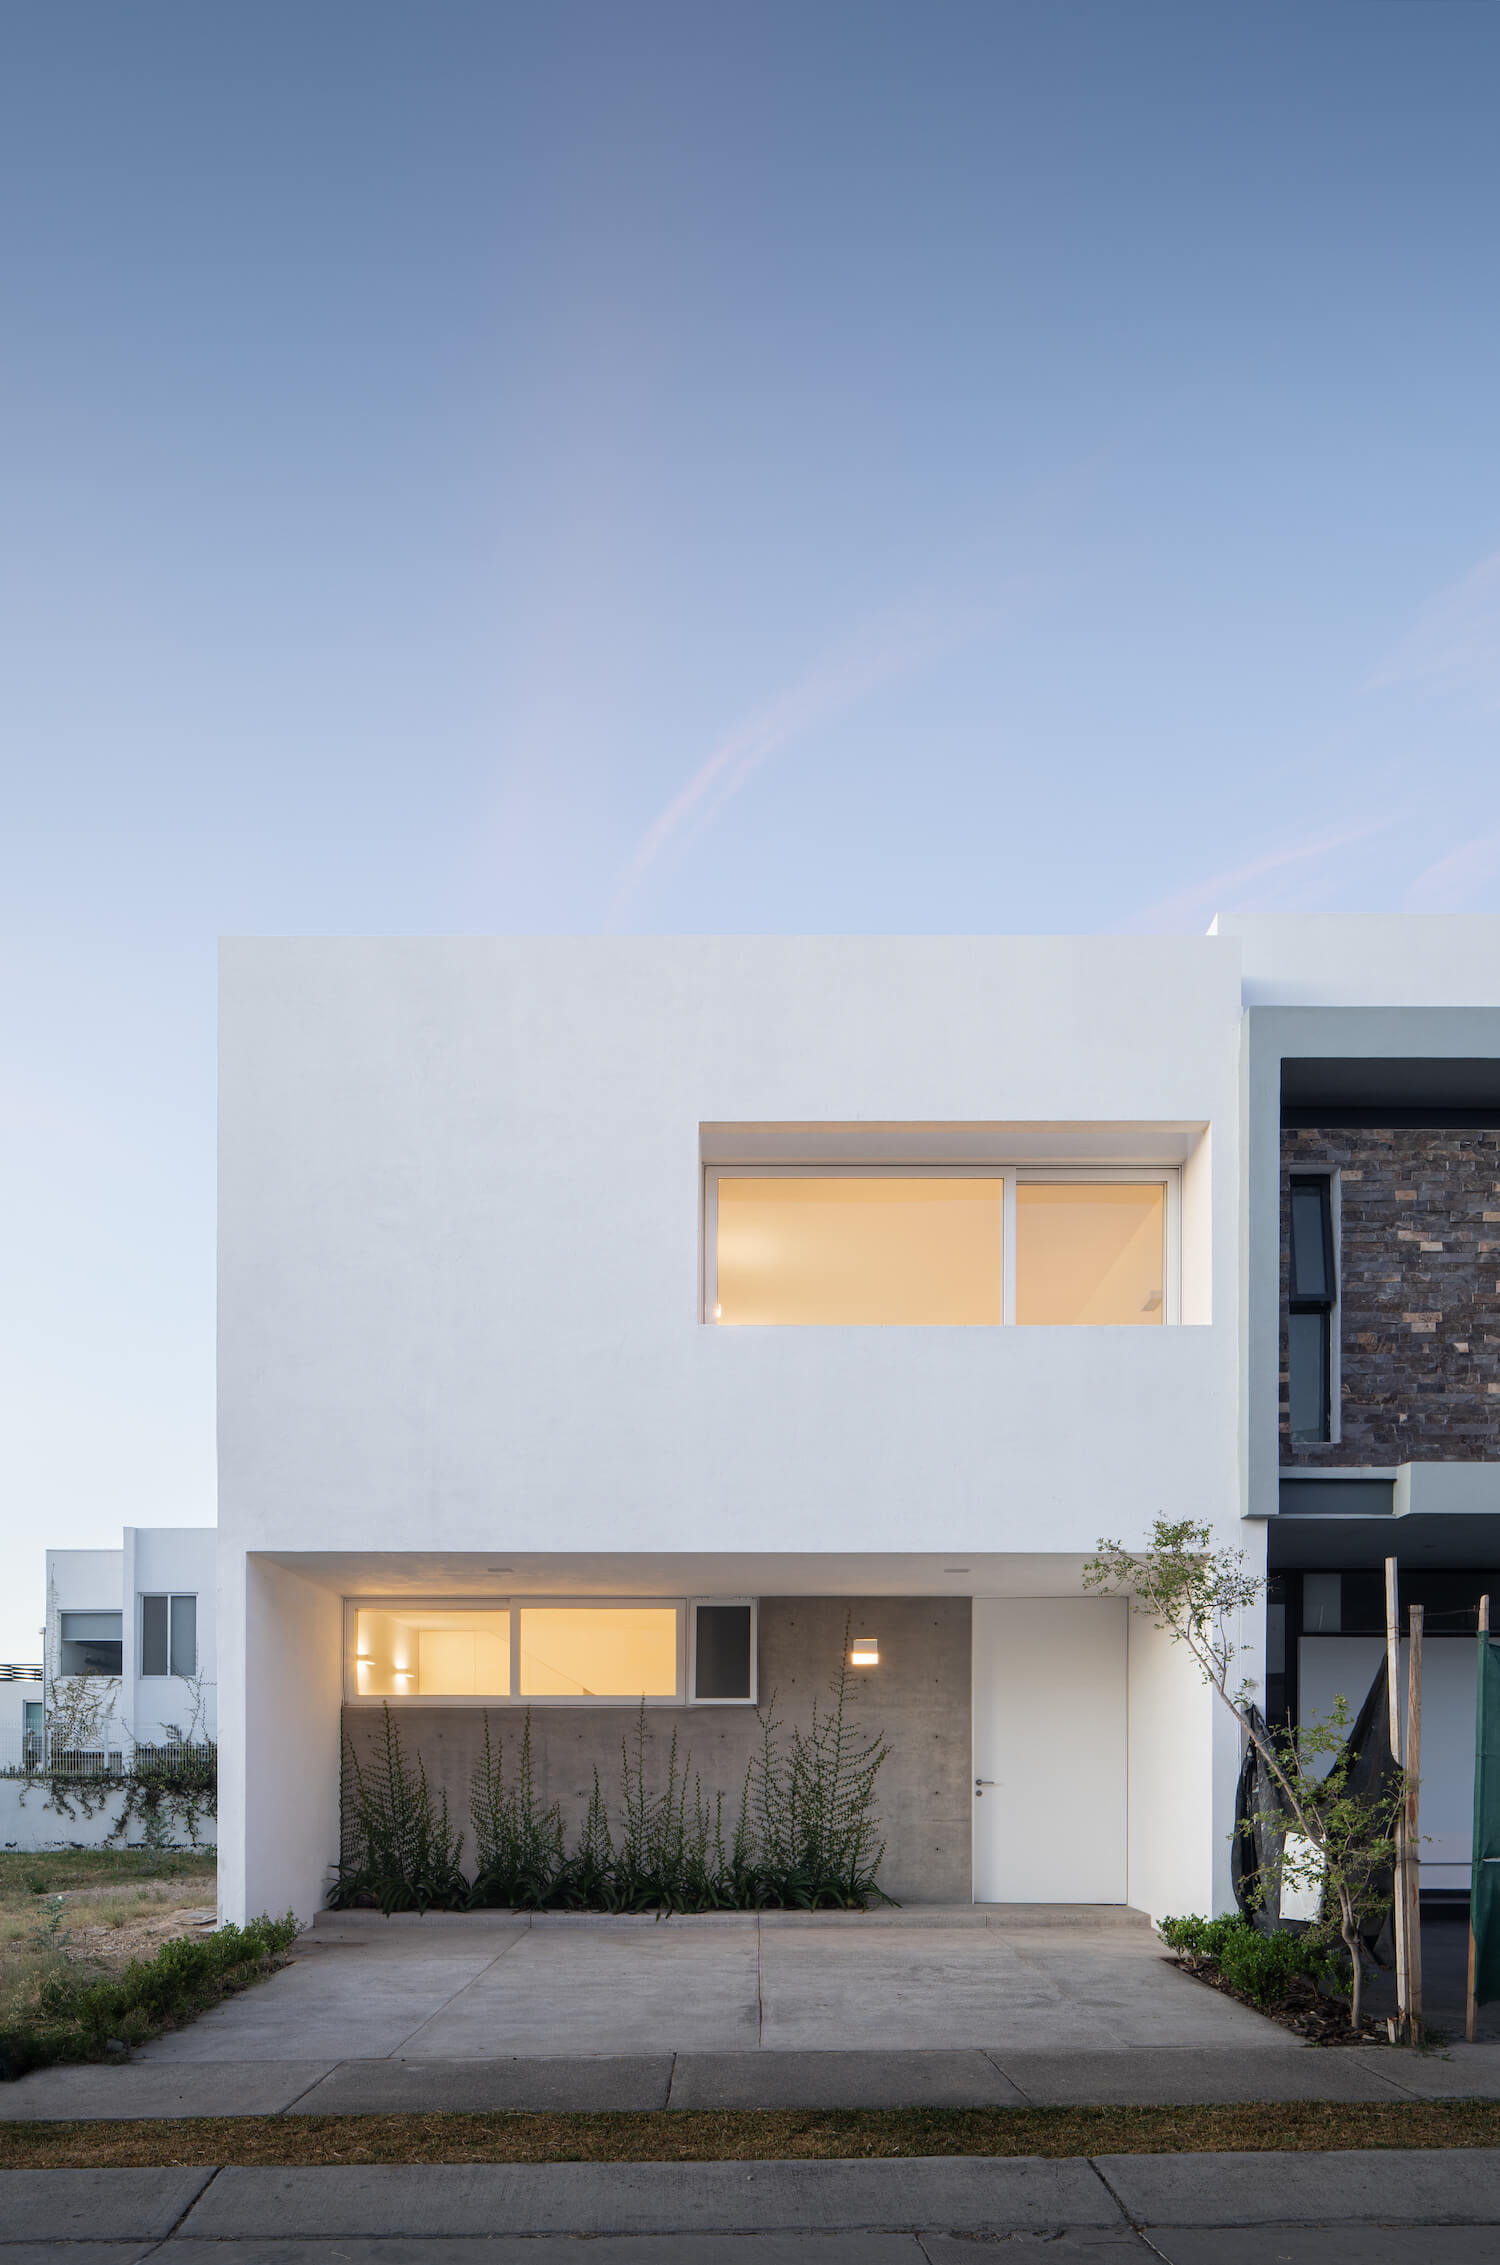 Cotaparedes Arquitectos designs Casa Sur|Houses